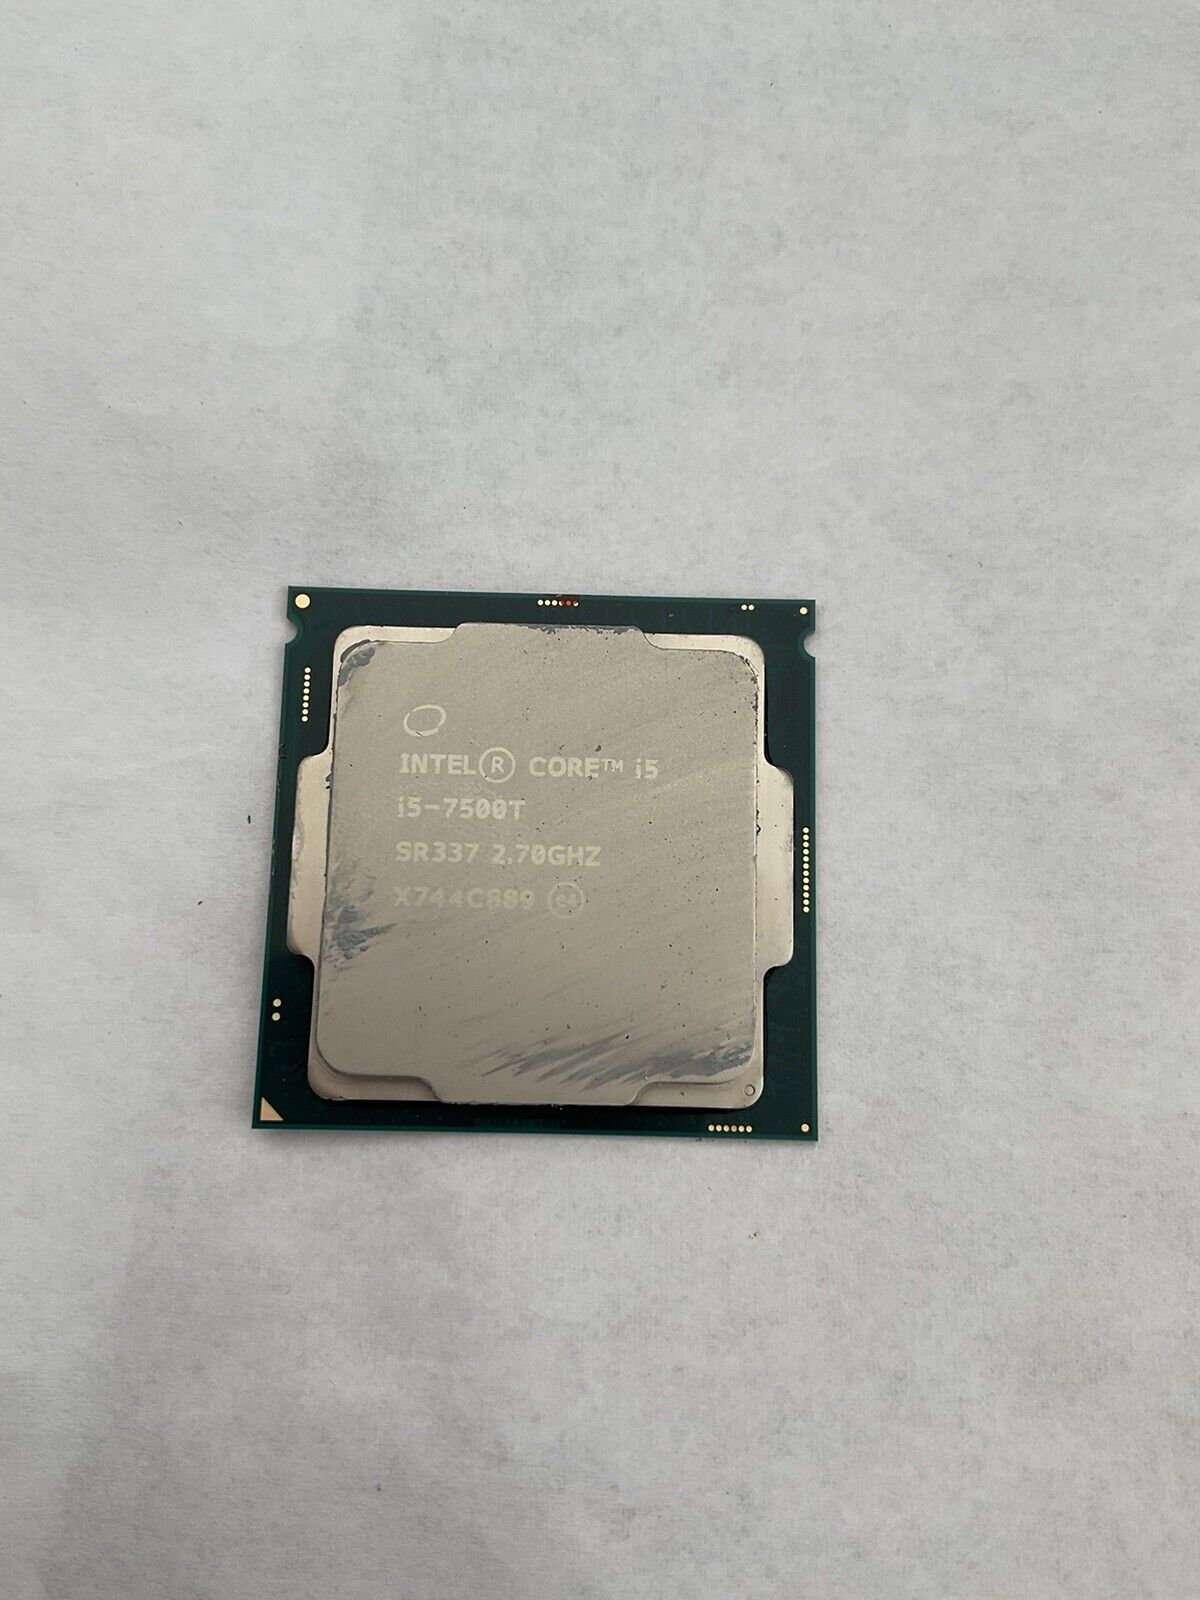 INTEL CORE i5-7500T SR337 2.70GHZ  Processor CPU Tested